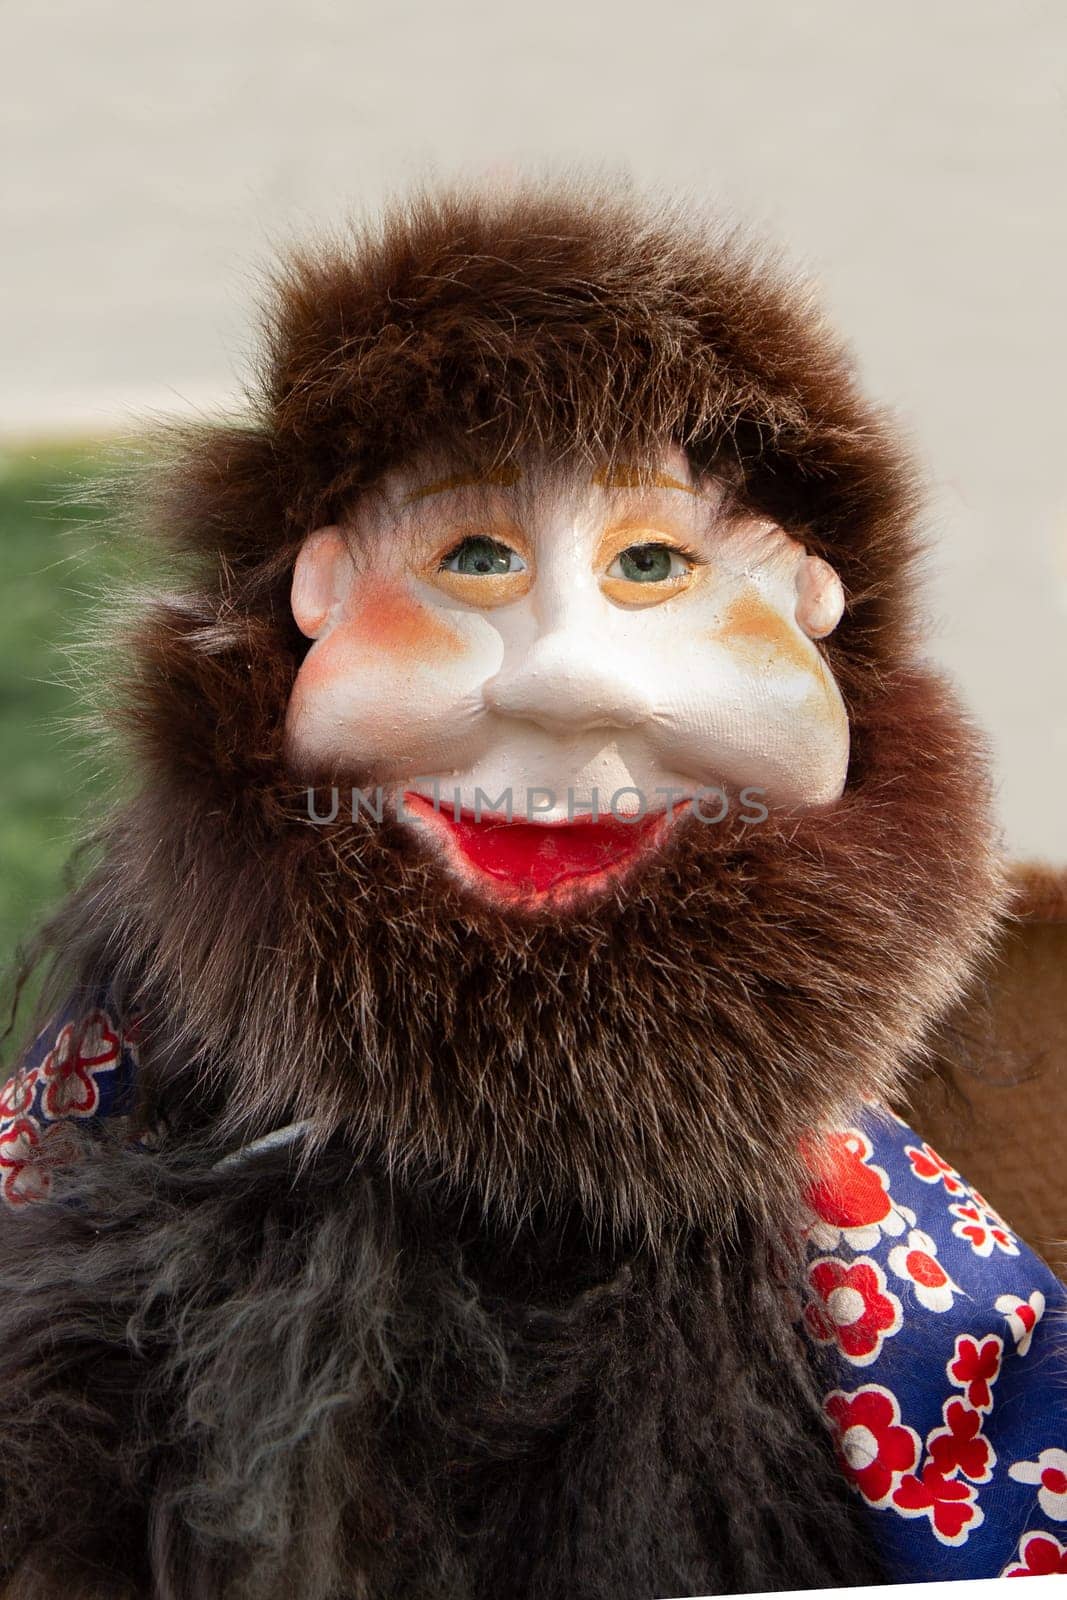 Handmade hobgoblin or elf with red beard